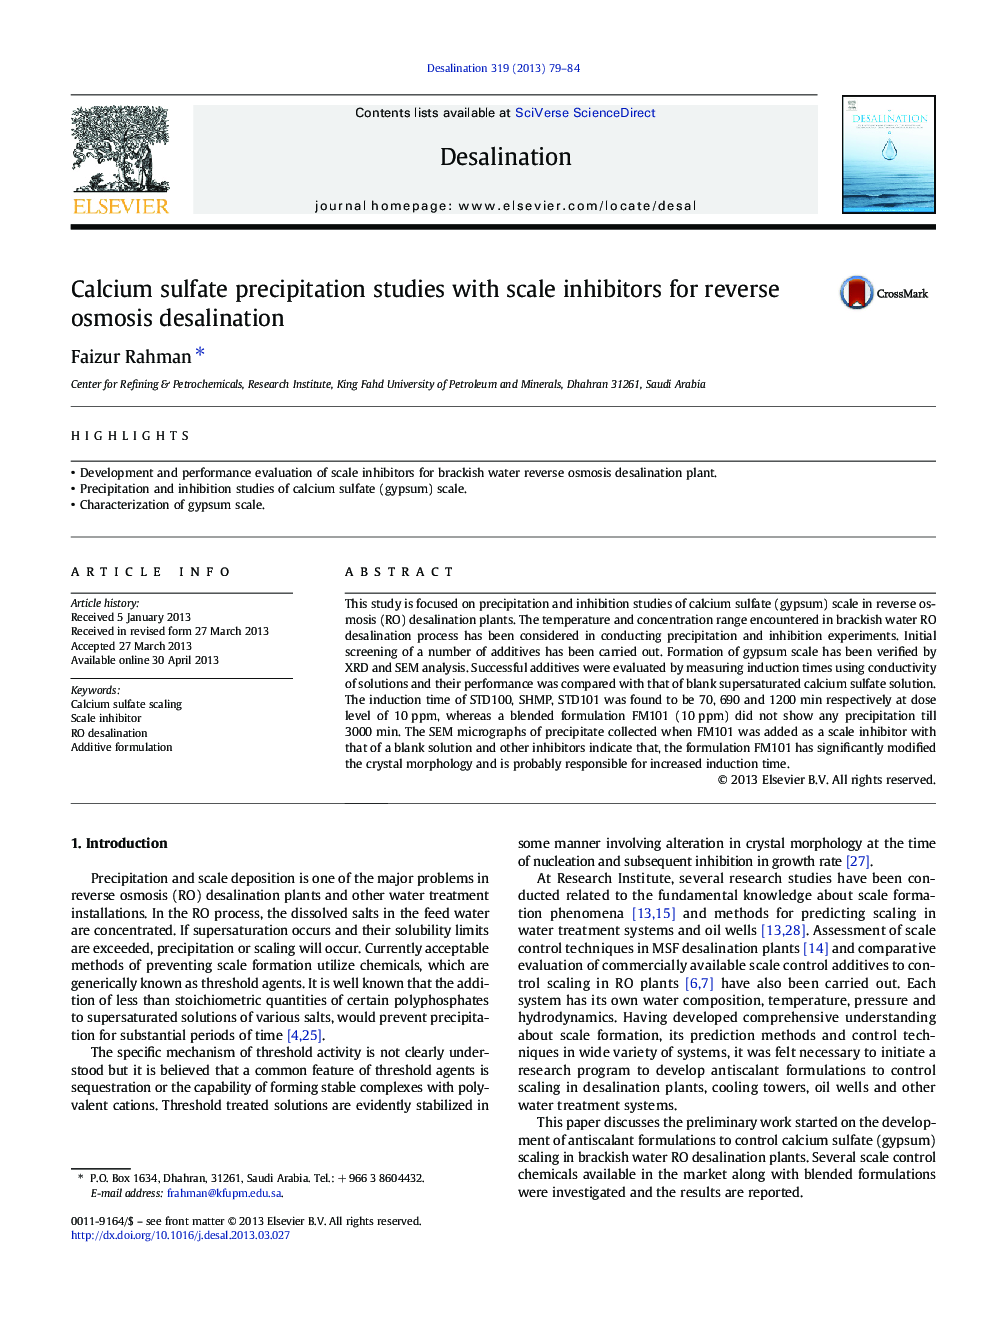 Calcium sulfate precipitation studies with scale inhibitors for reverse osmosis desalination